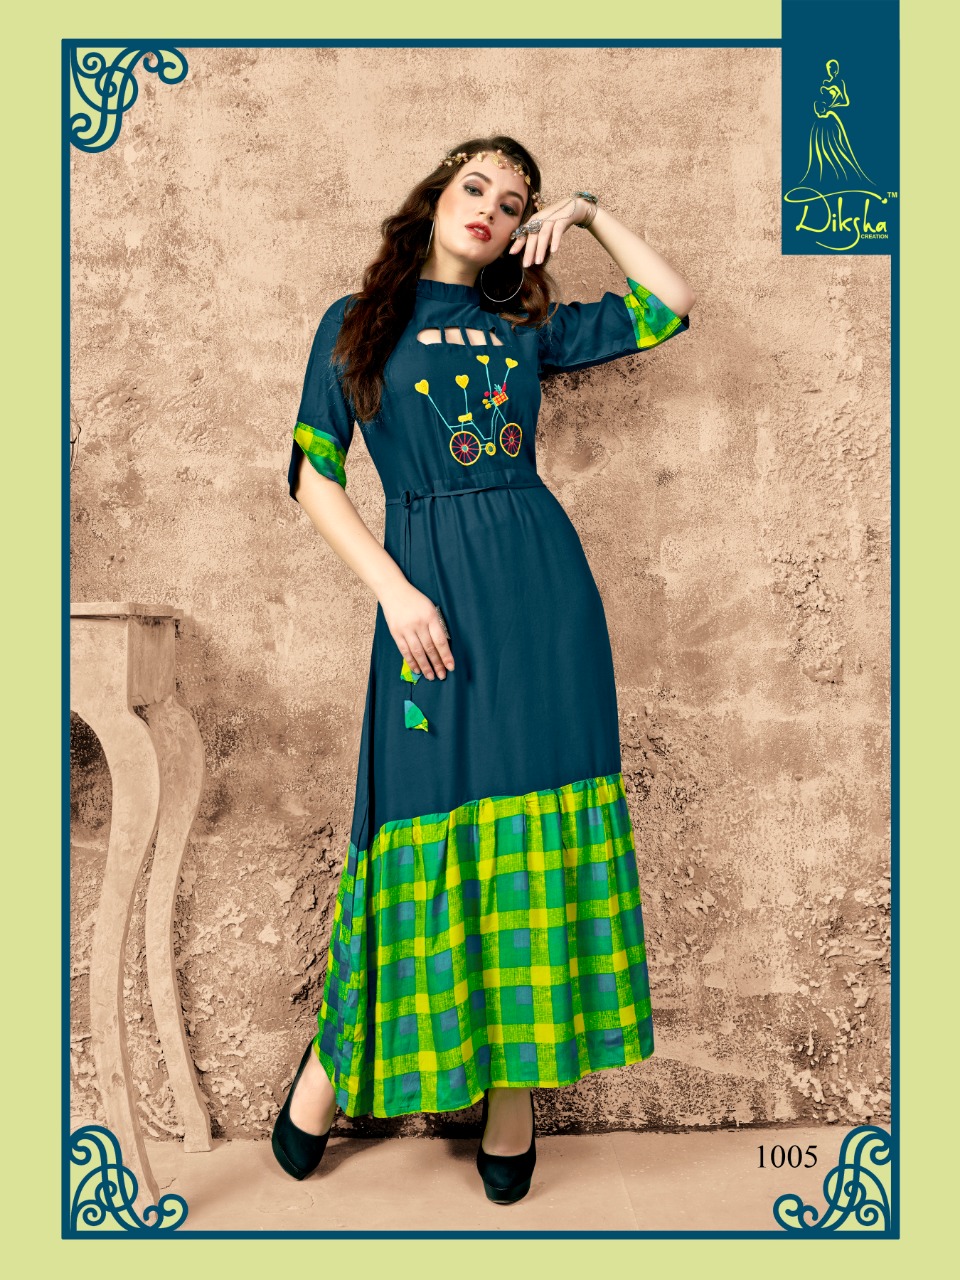 Diksha fashion free style Vol-1 gorgeous stylish look Kurties in wholesale price